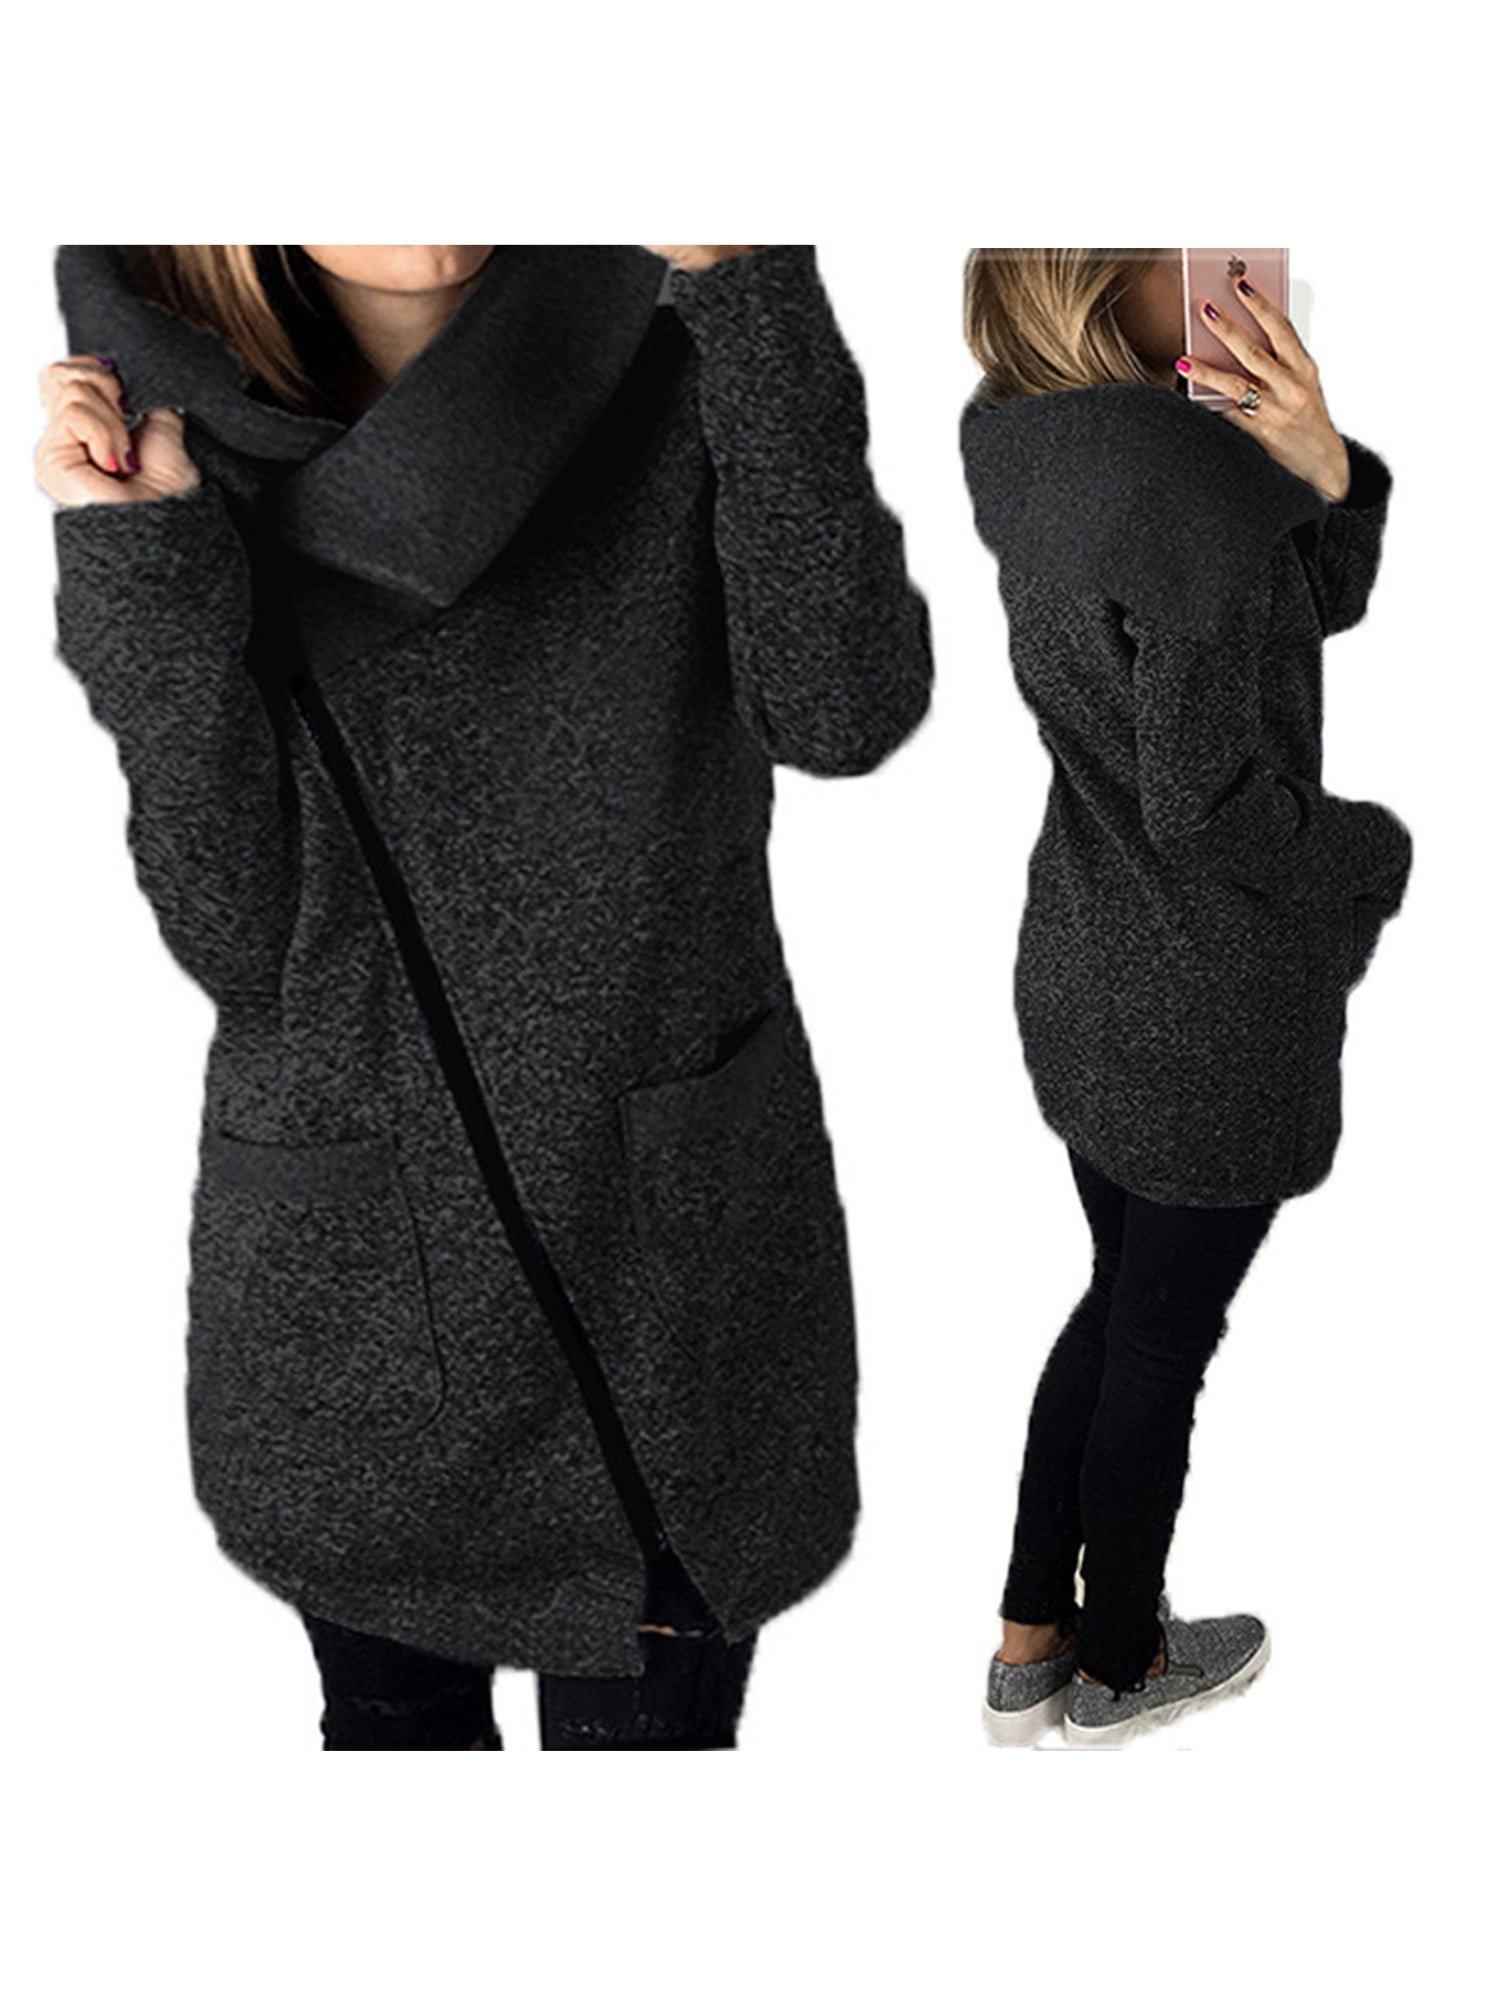 AOJIAN Women Jacket Long Sleeve Outerwear Hooded Galaxy Print Drawstring Blouse Coat 